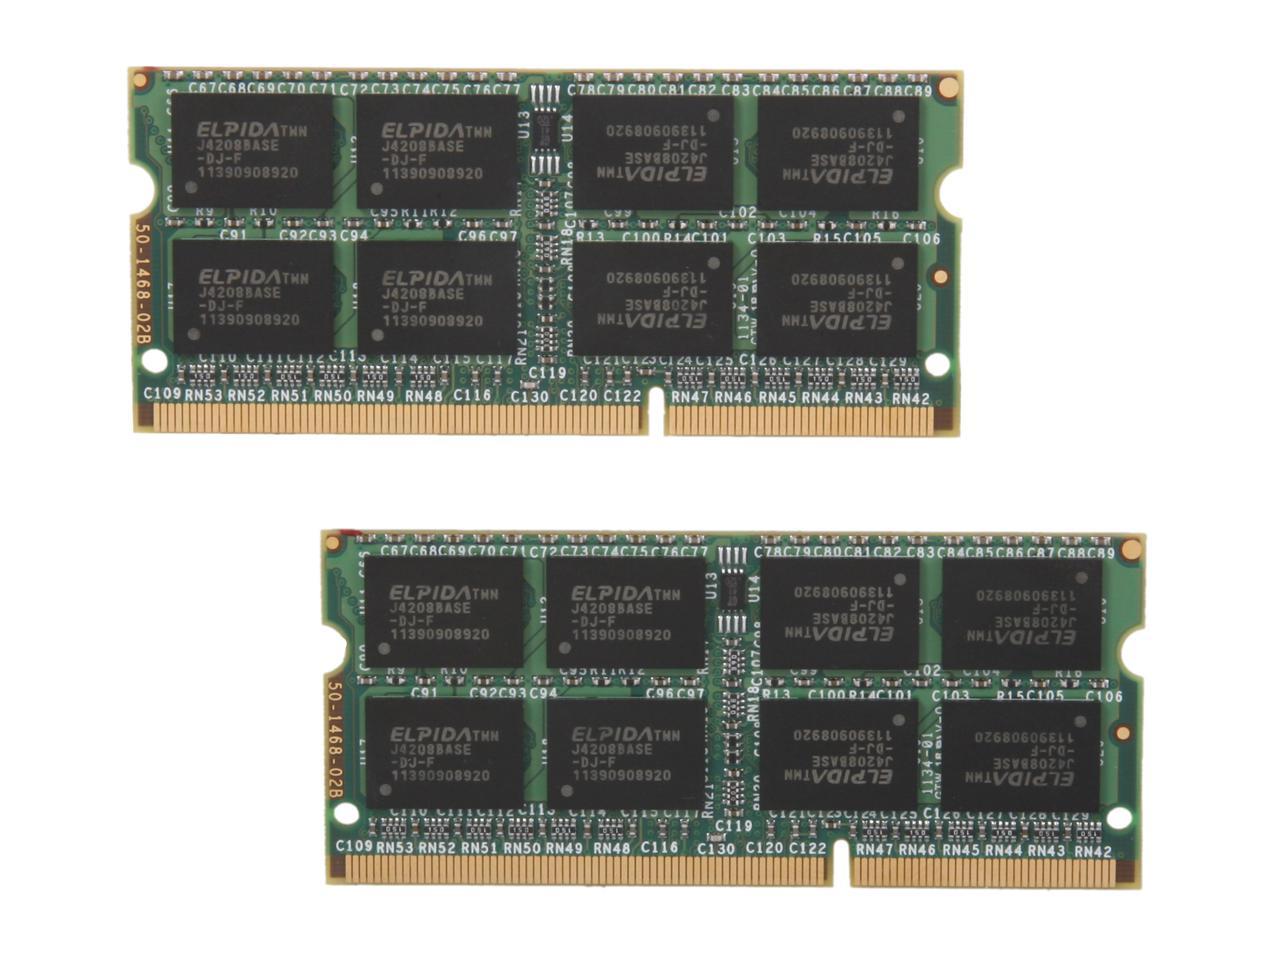 Mushkin 16GB (2 x 8GB) DDR3 1333 (PC3 10600) Memory for Apple Model 977020A